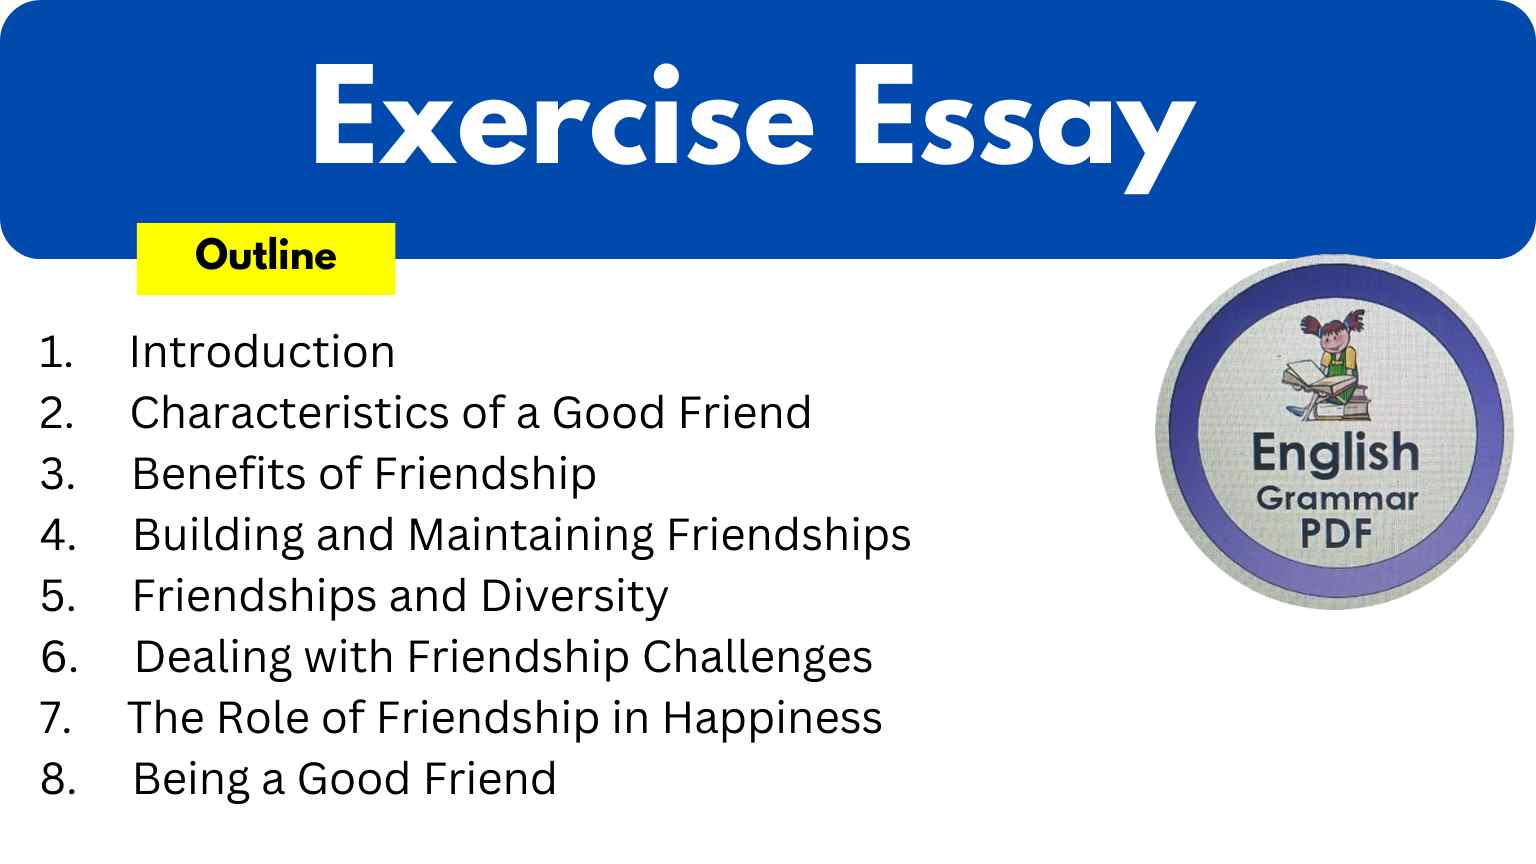 Exercise Essay